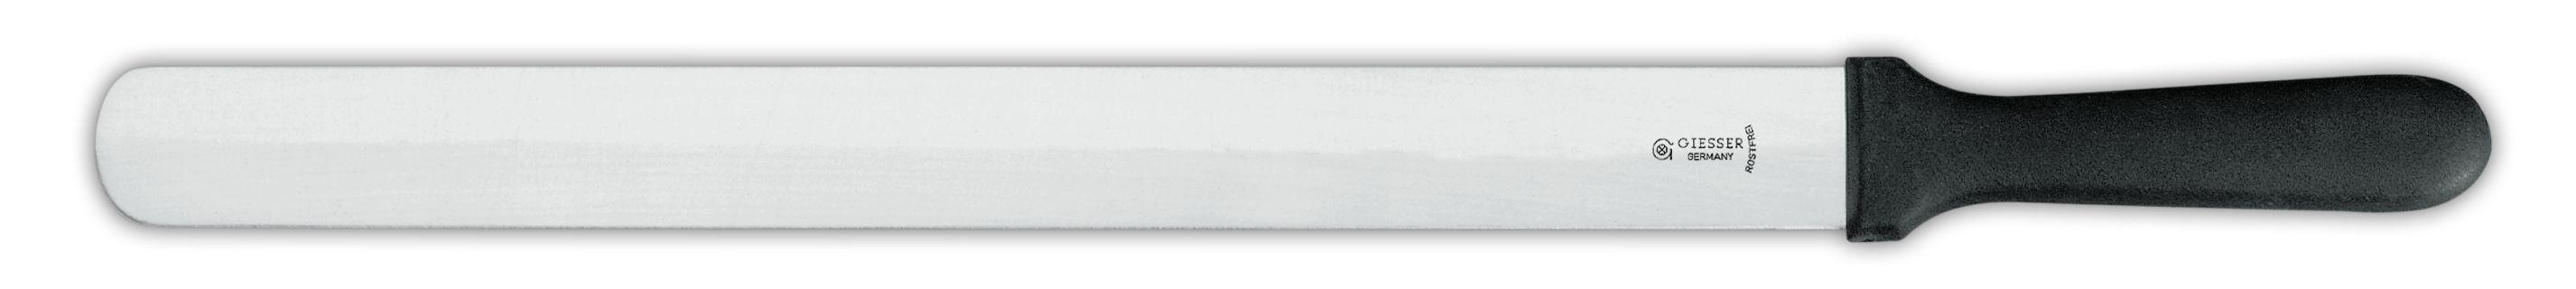 Нож для выпечки 8137, 26 см,  черная рукоятка